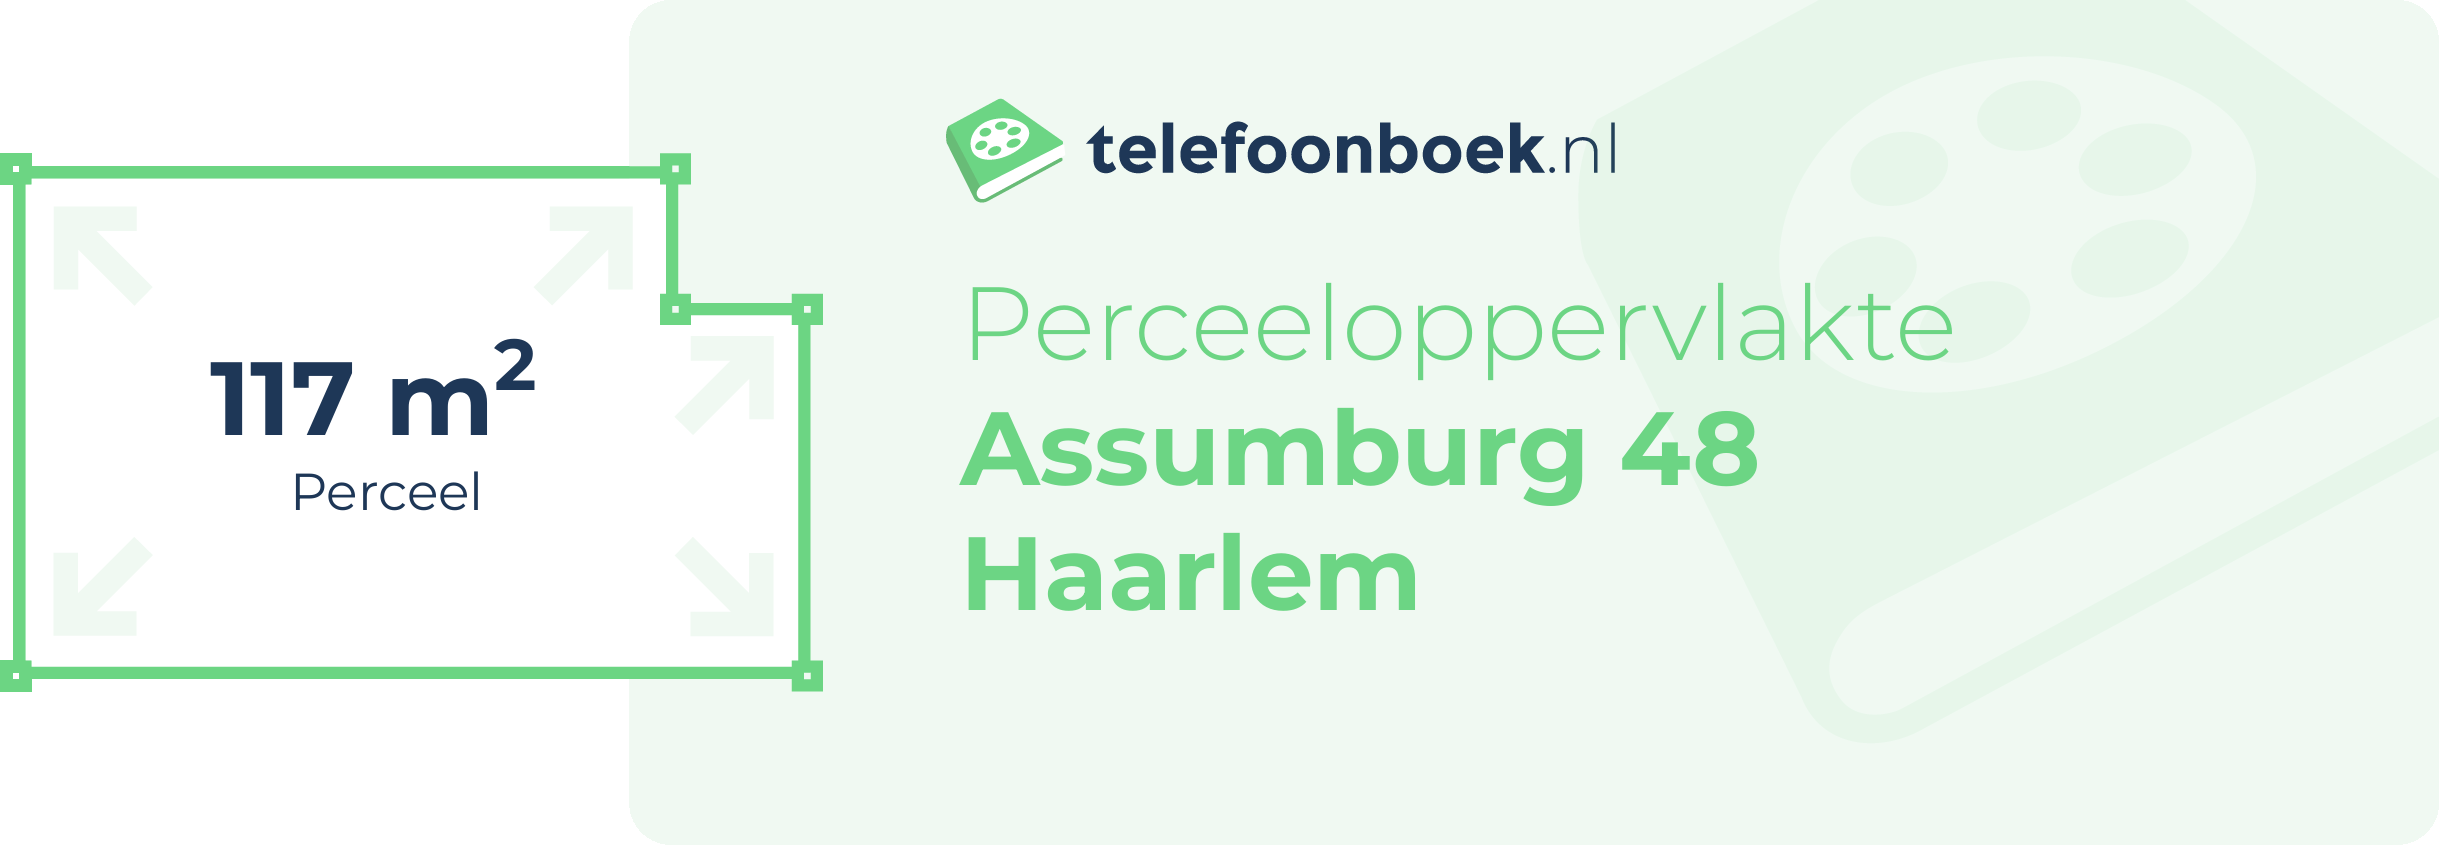 Perceeloppervlakte Assumburg 48 Haarlem